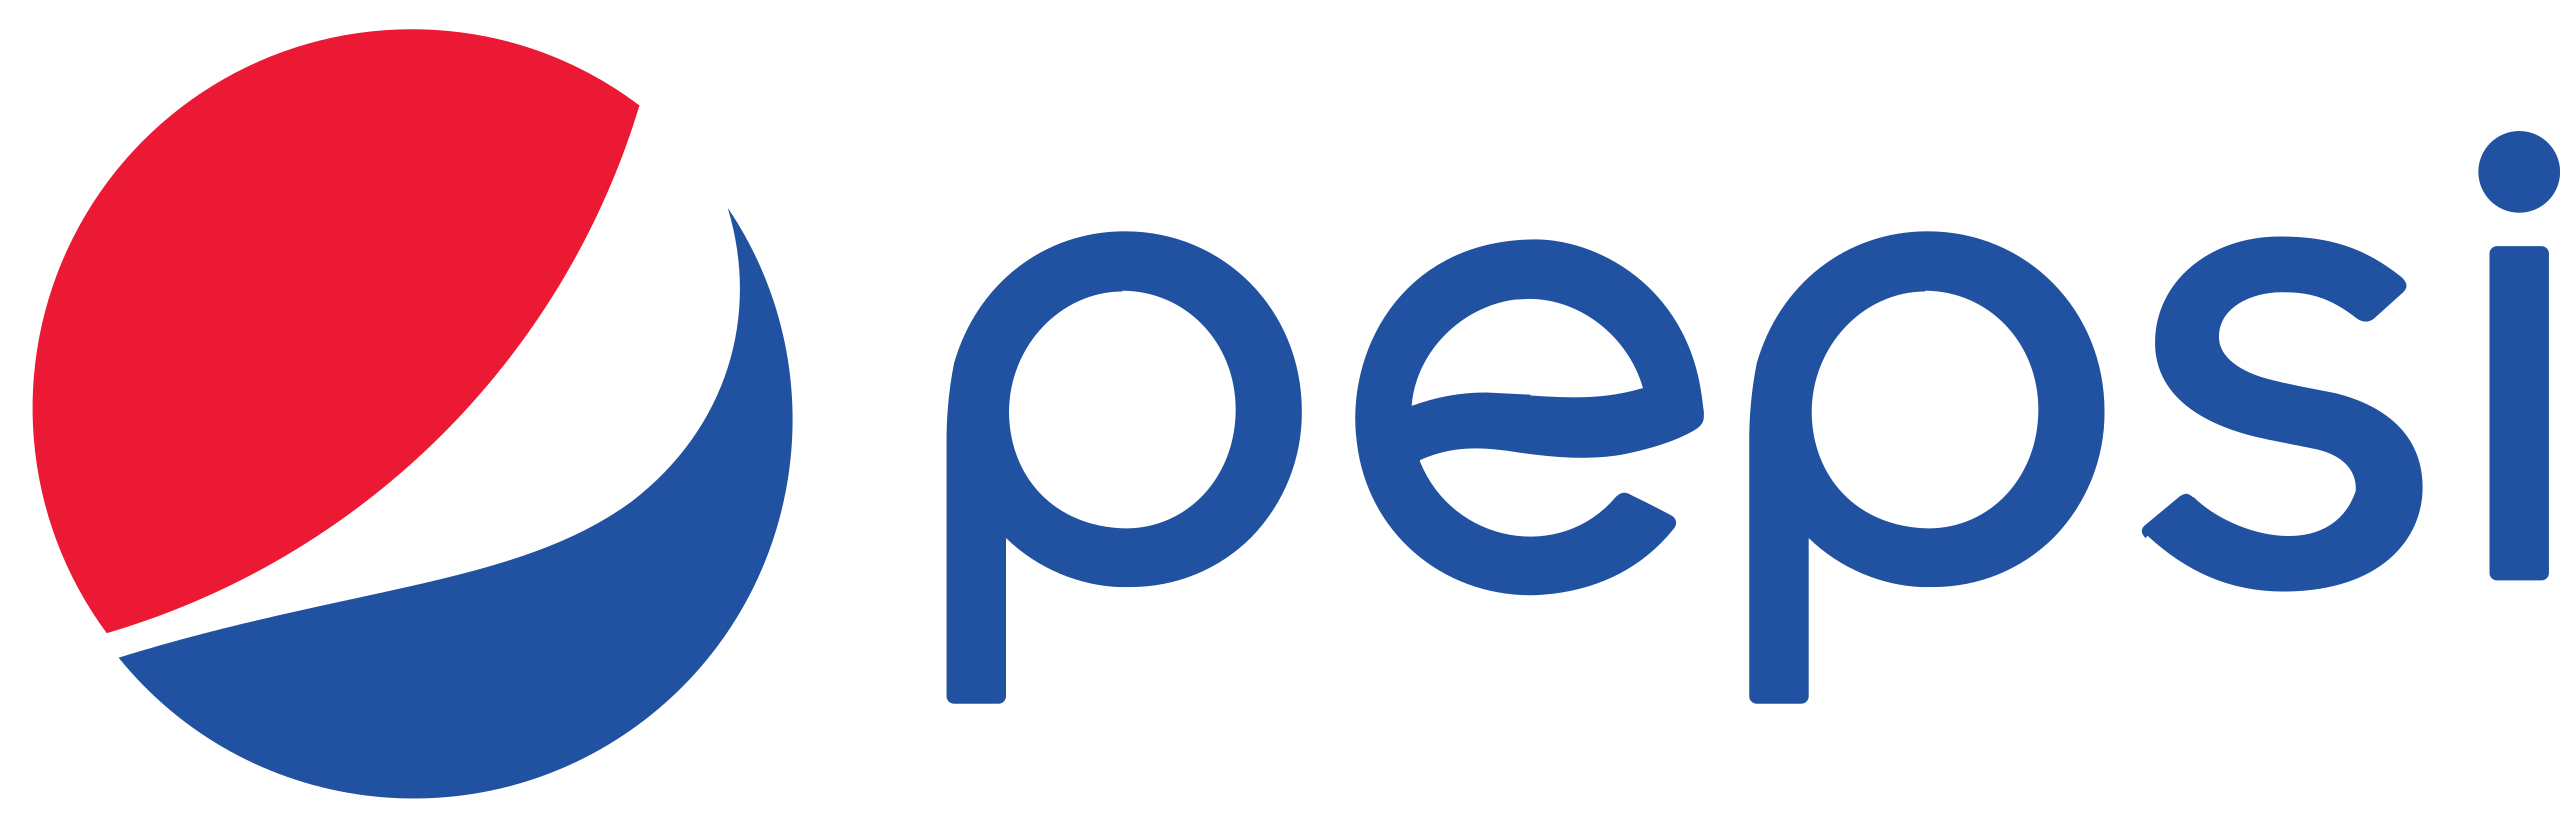 2560px-Pepsi_logo_new.svg